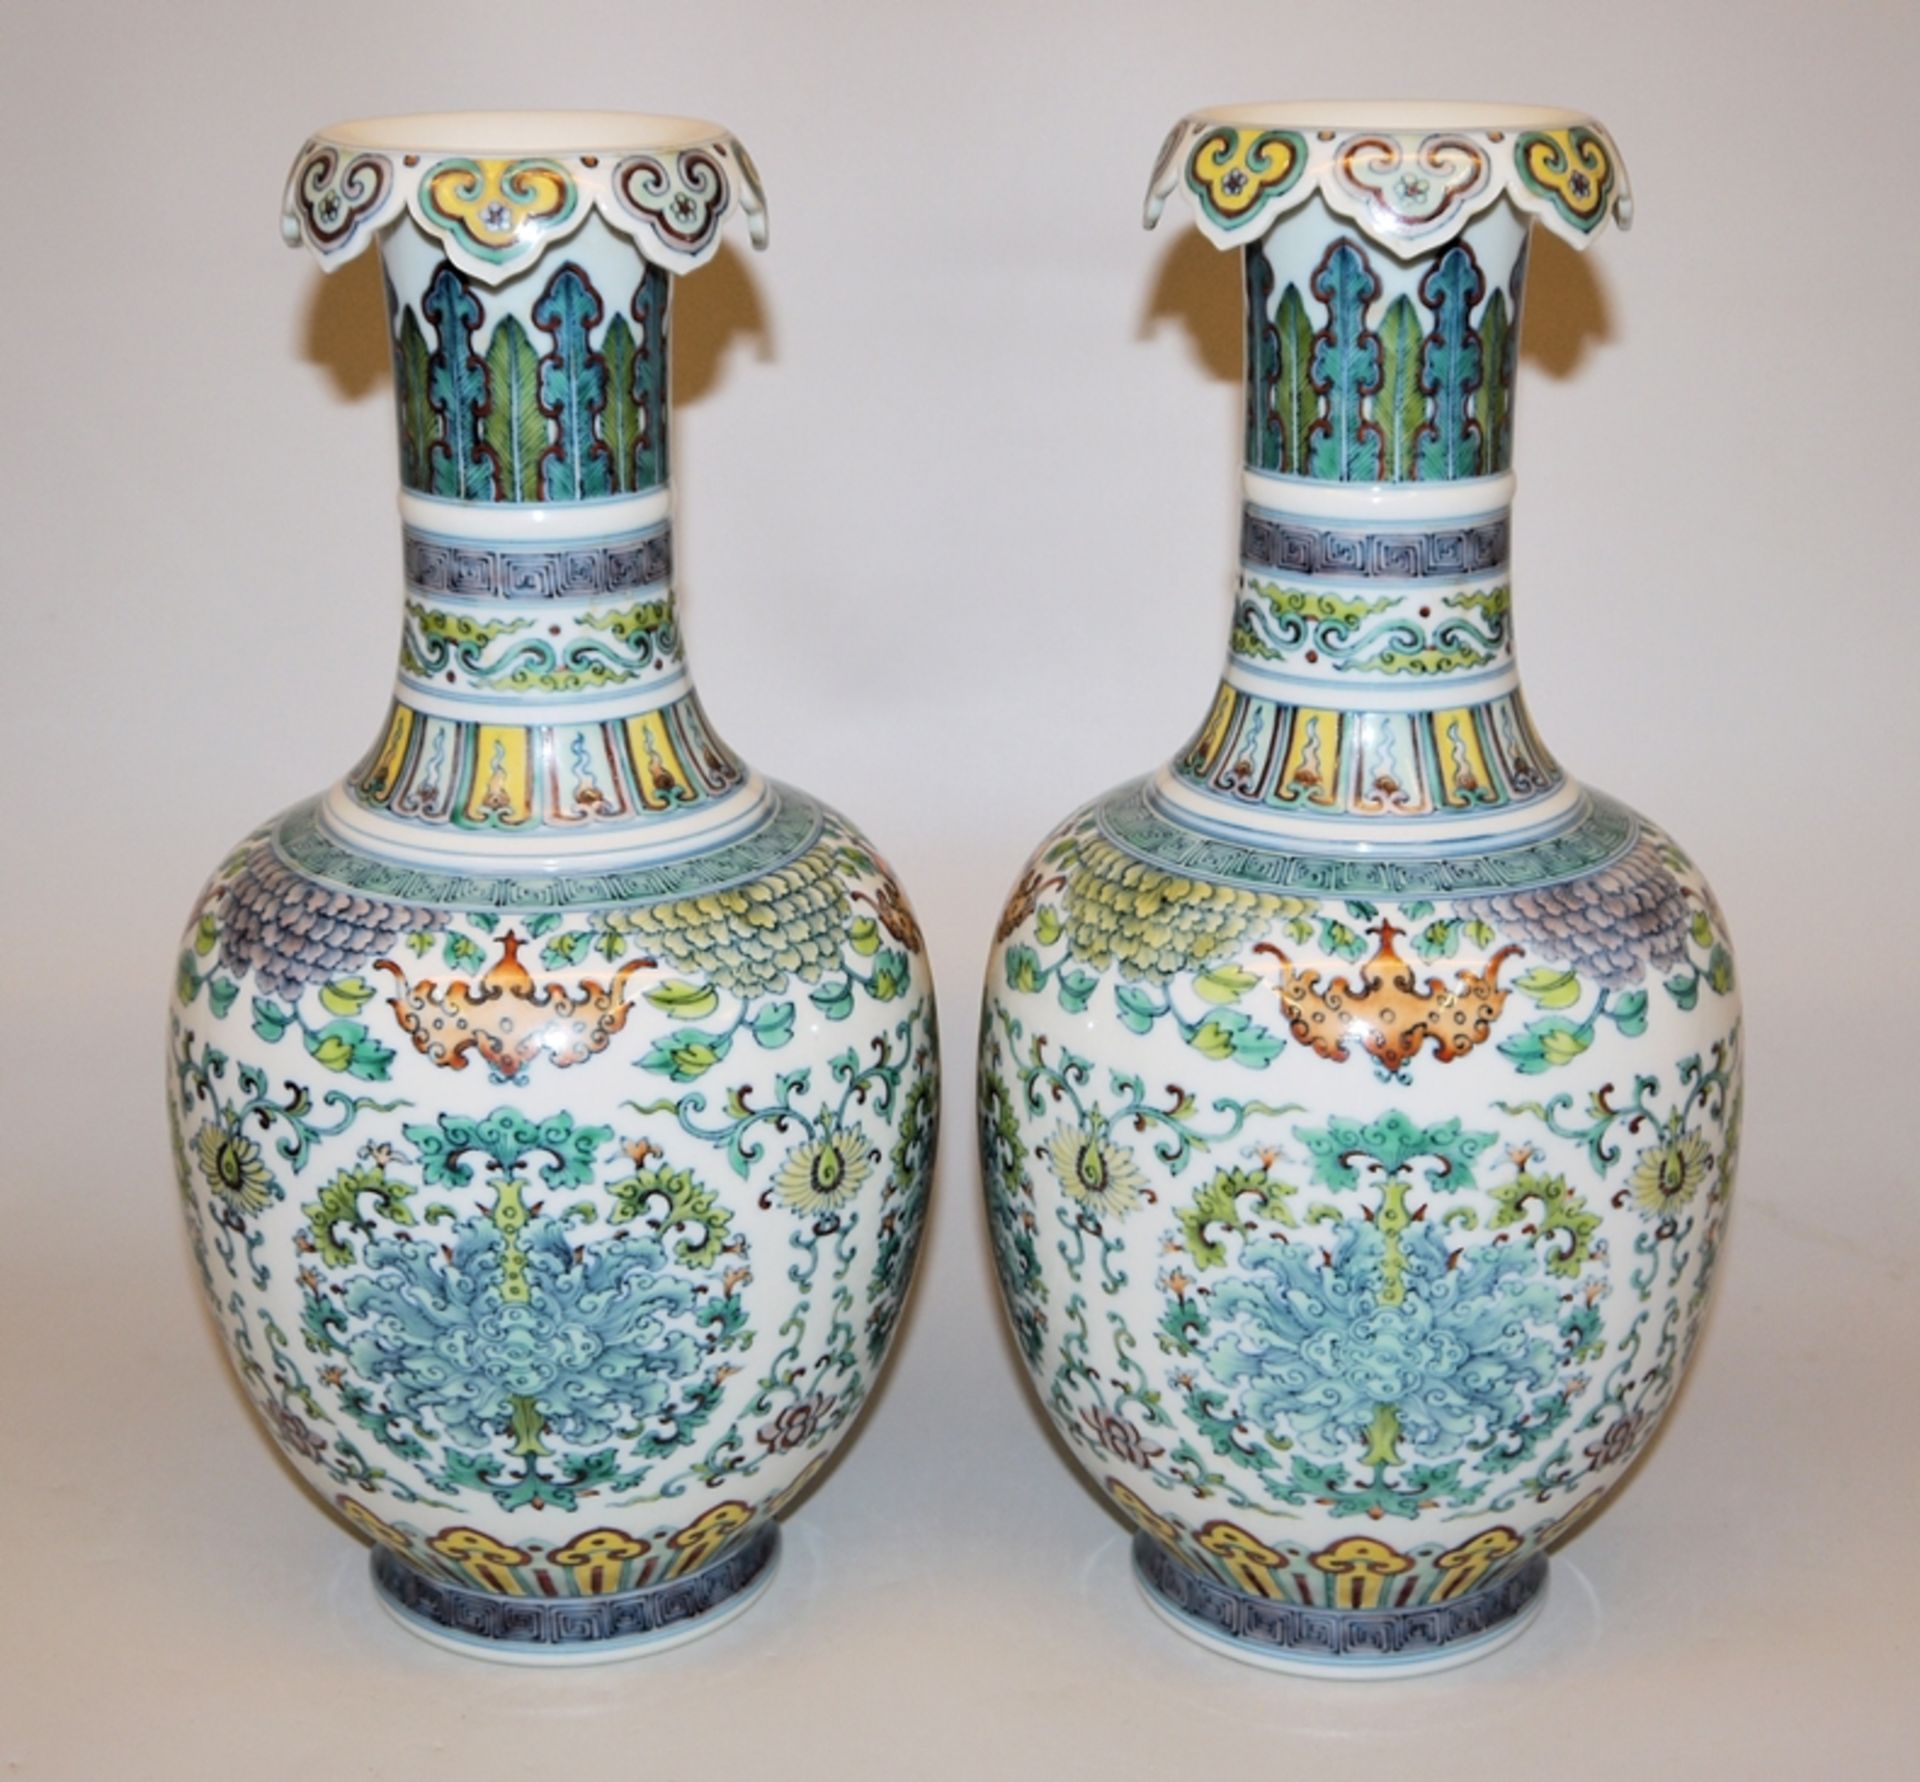 Exquisite pair of doucai vases, probably Republic period, China 20th century 